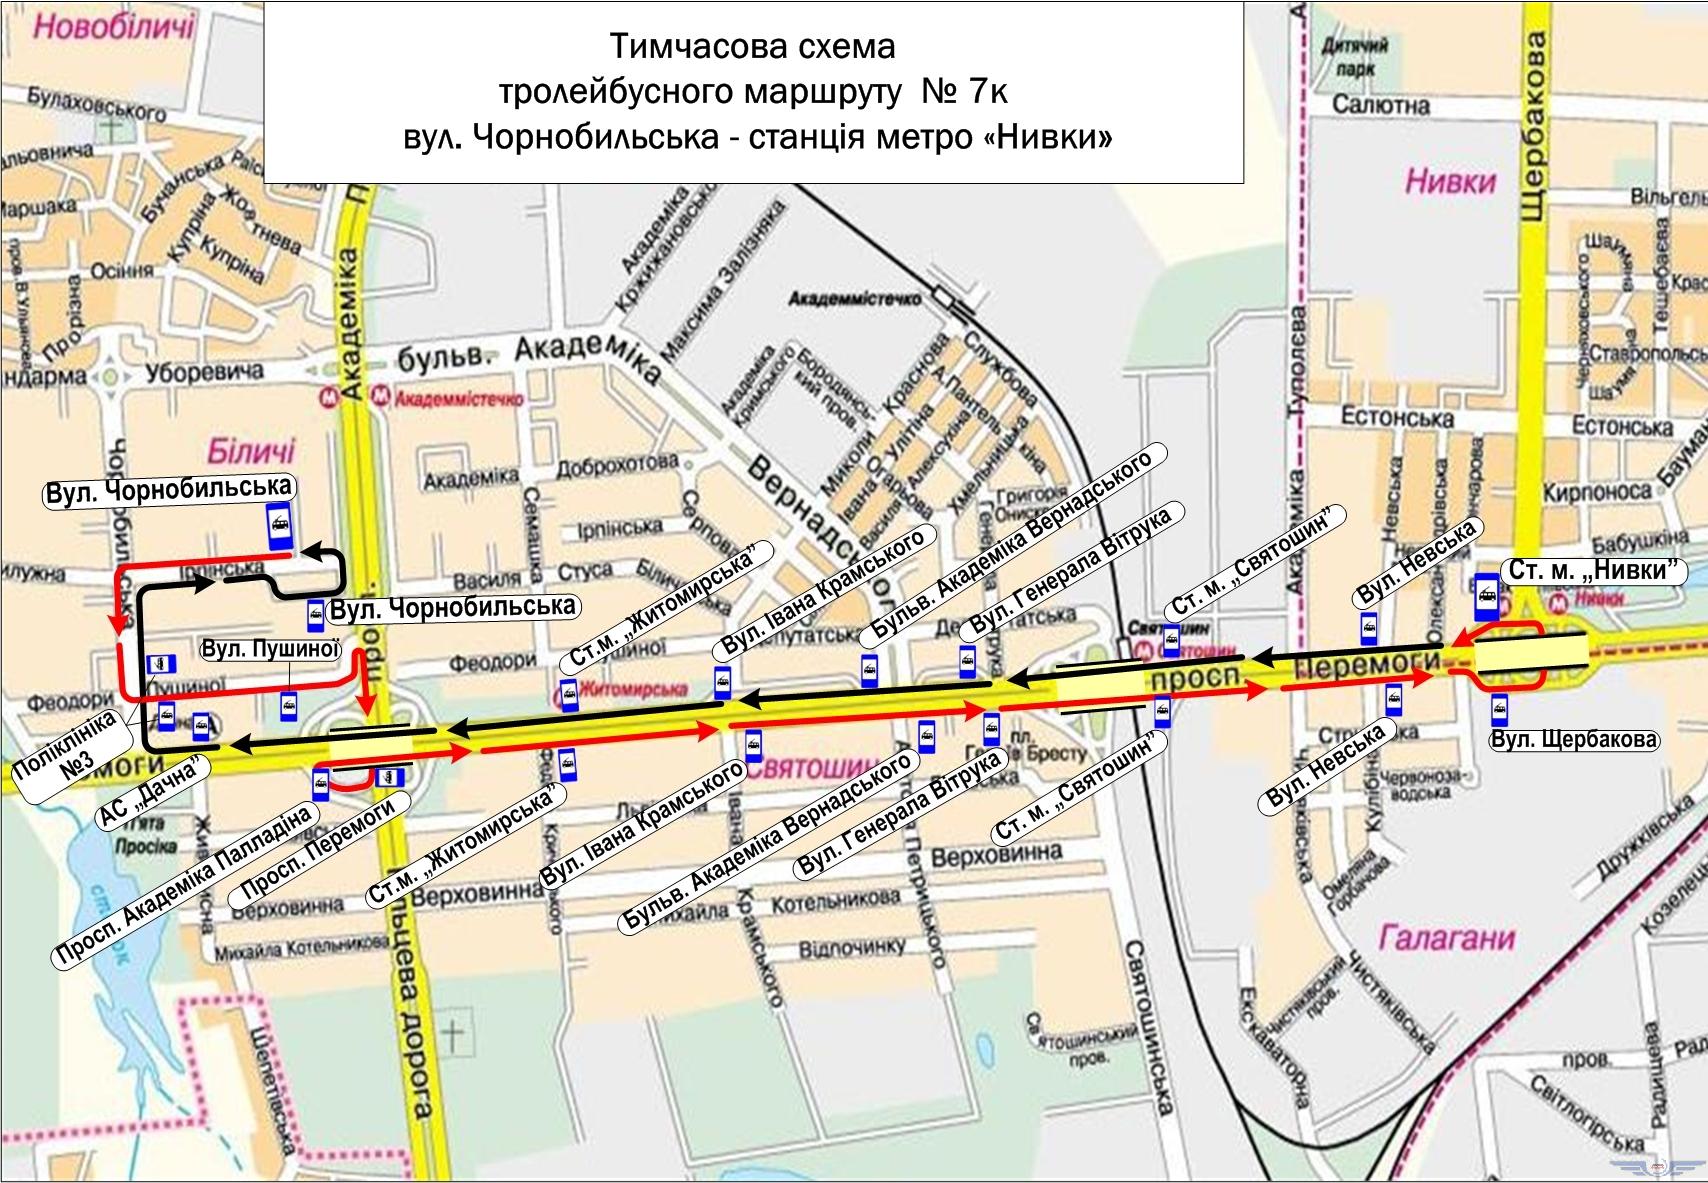 От станции метро “Нивки“ до станции метро ”Шулявская” в Киеве не будут ходить троллейбусы до 23 августа